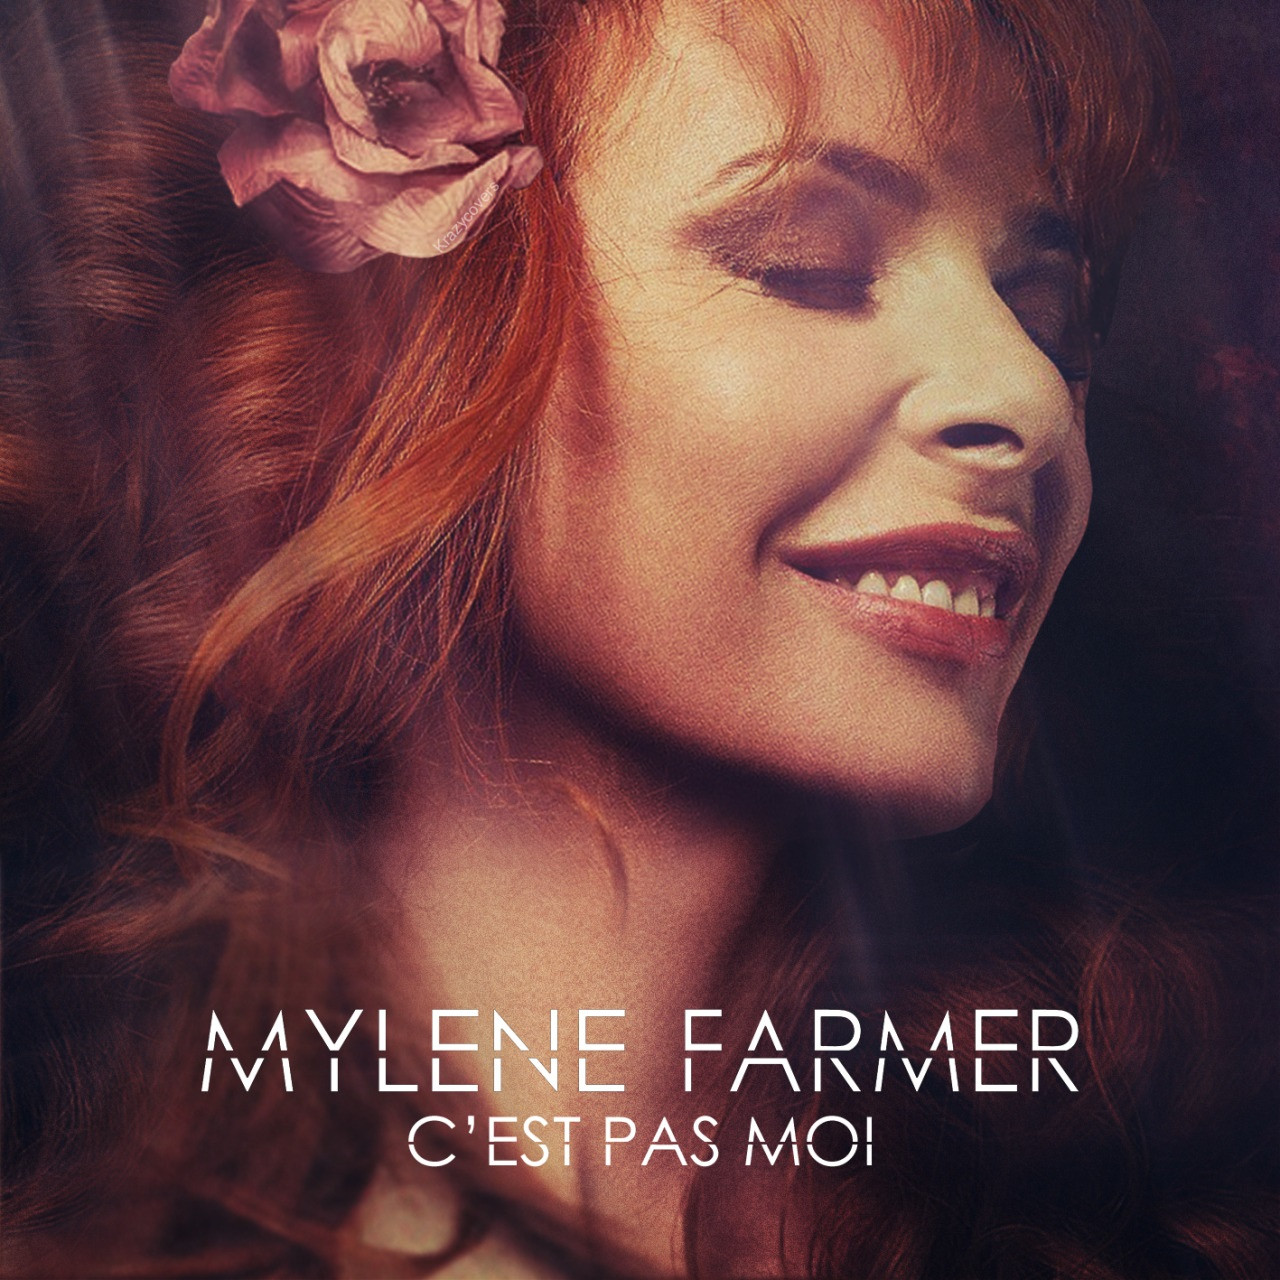 Милен Фармер (Mylene Farmer)